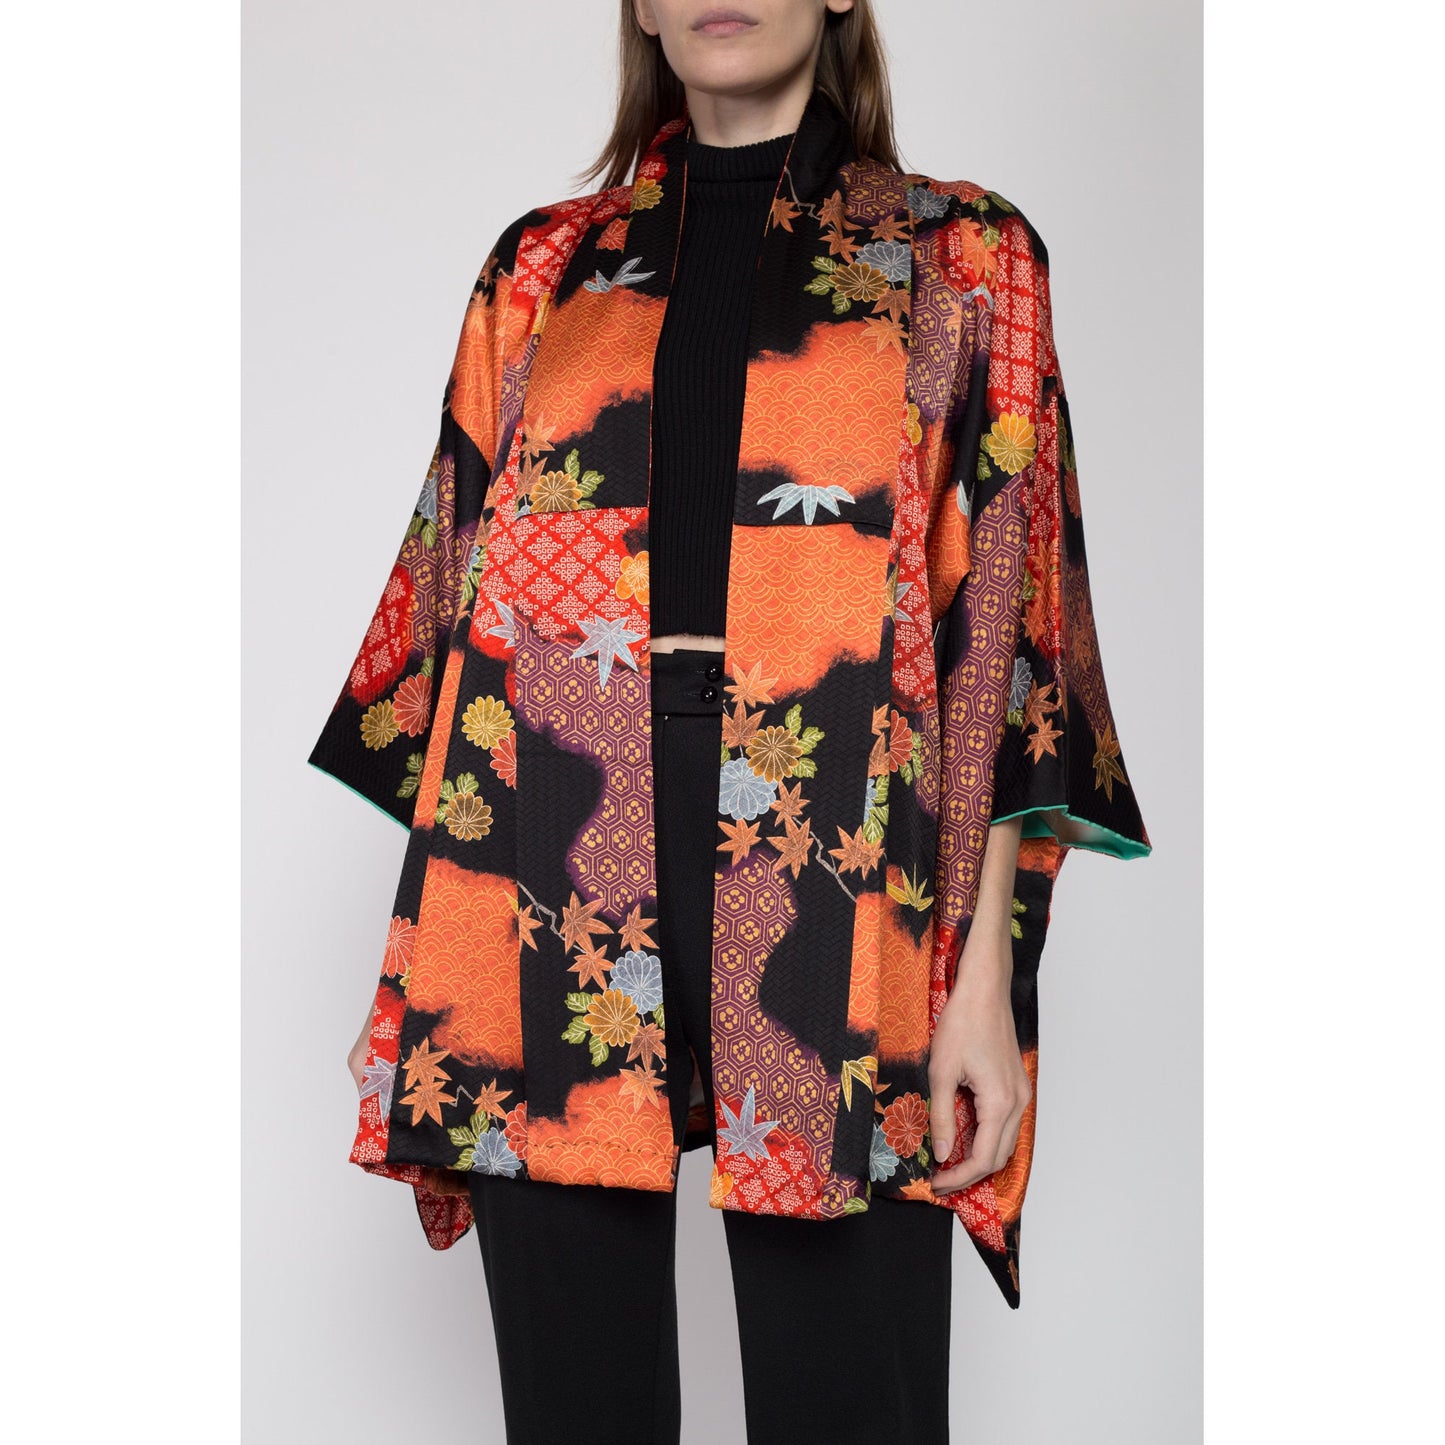 One Size Vintage Japanese Silk Leaf Print Haori Kimono | Boho Colorful Asian Jacket Mini Robe